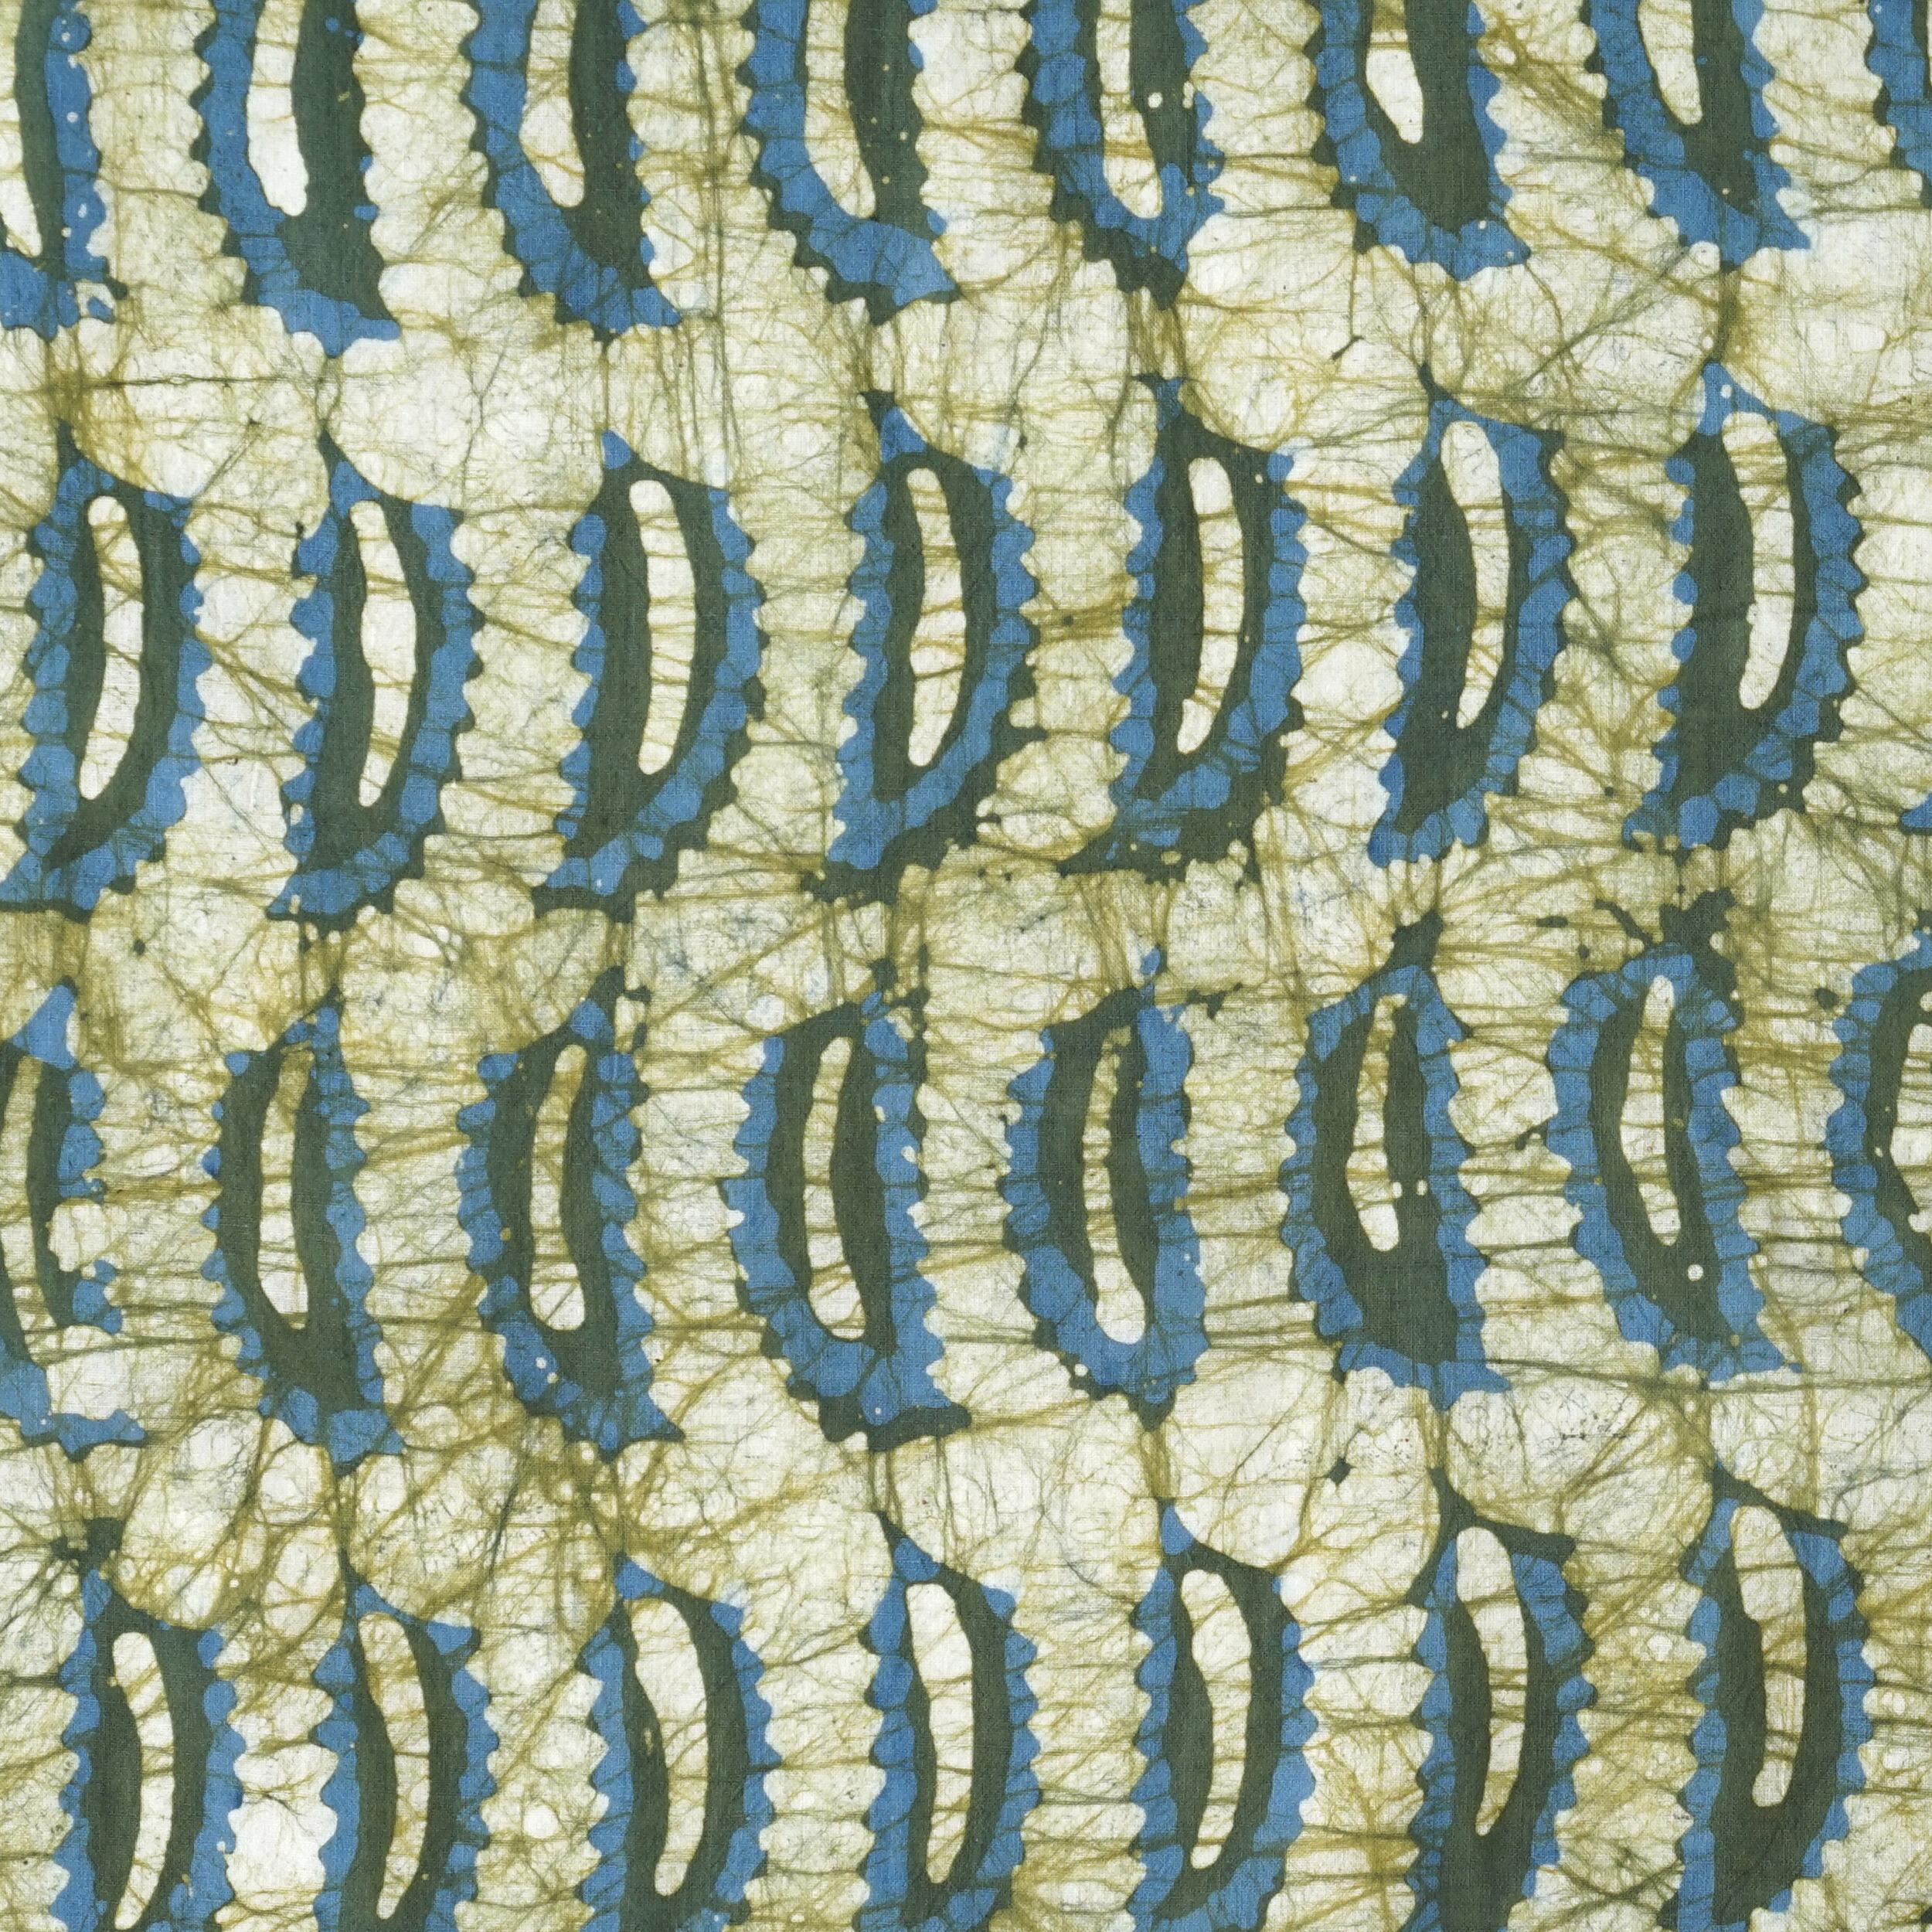 Block-Printed Batik Fabric - Cotton Cloth - Reactive Dyes - Banana Leaves Design - Flat